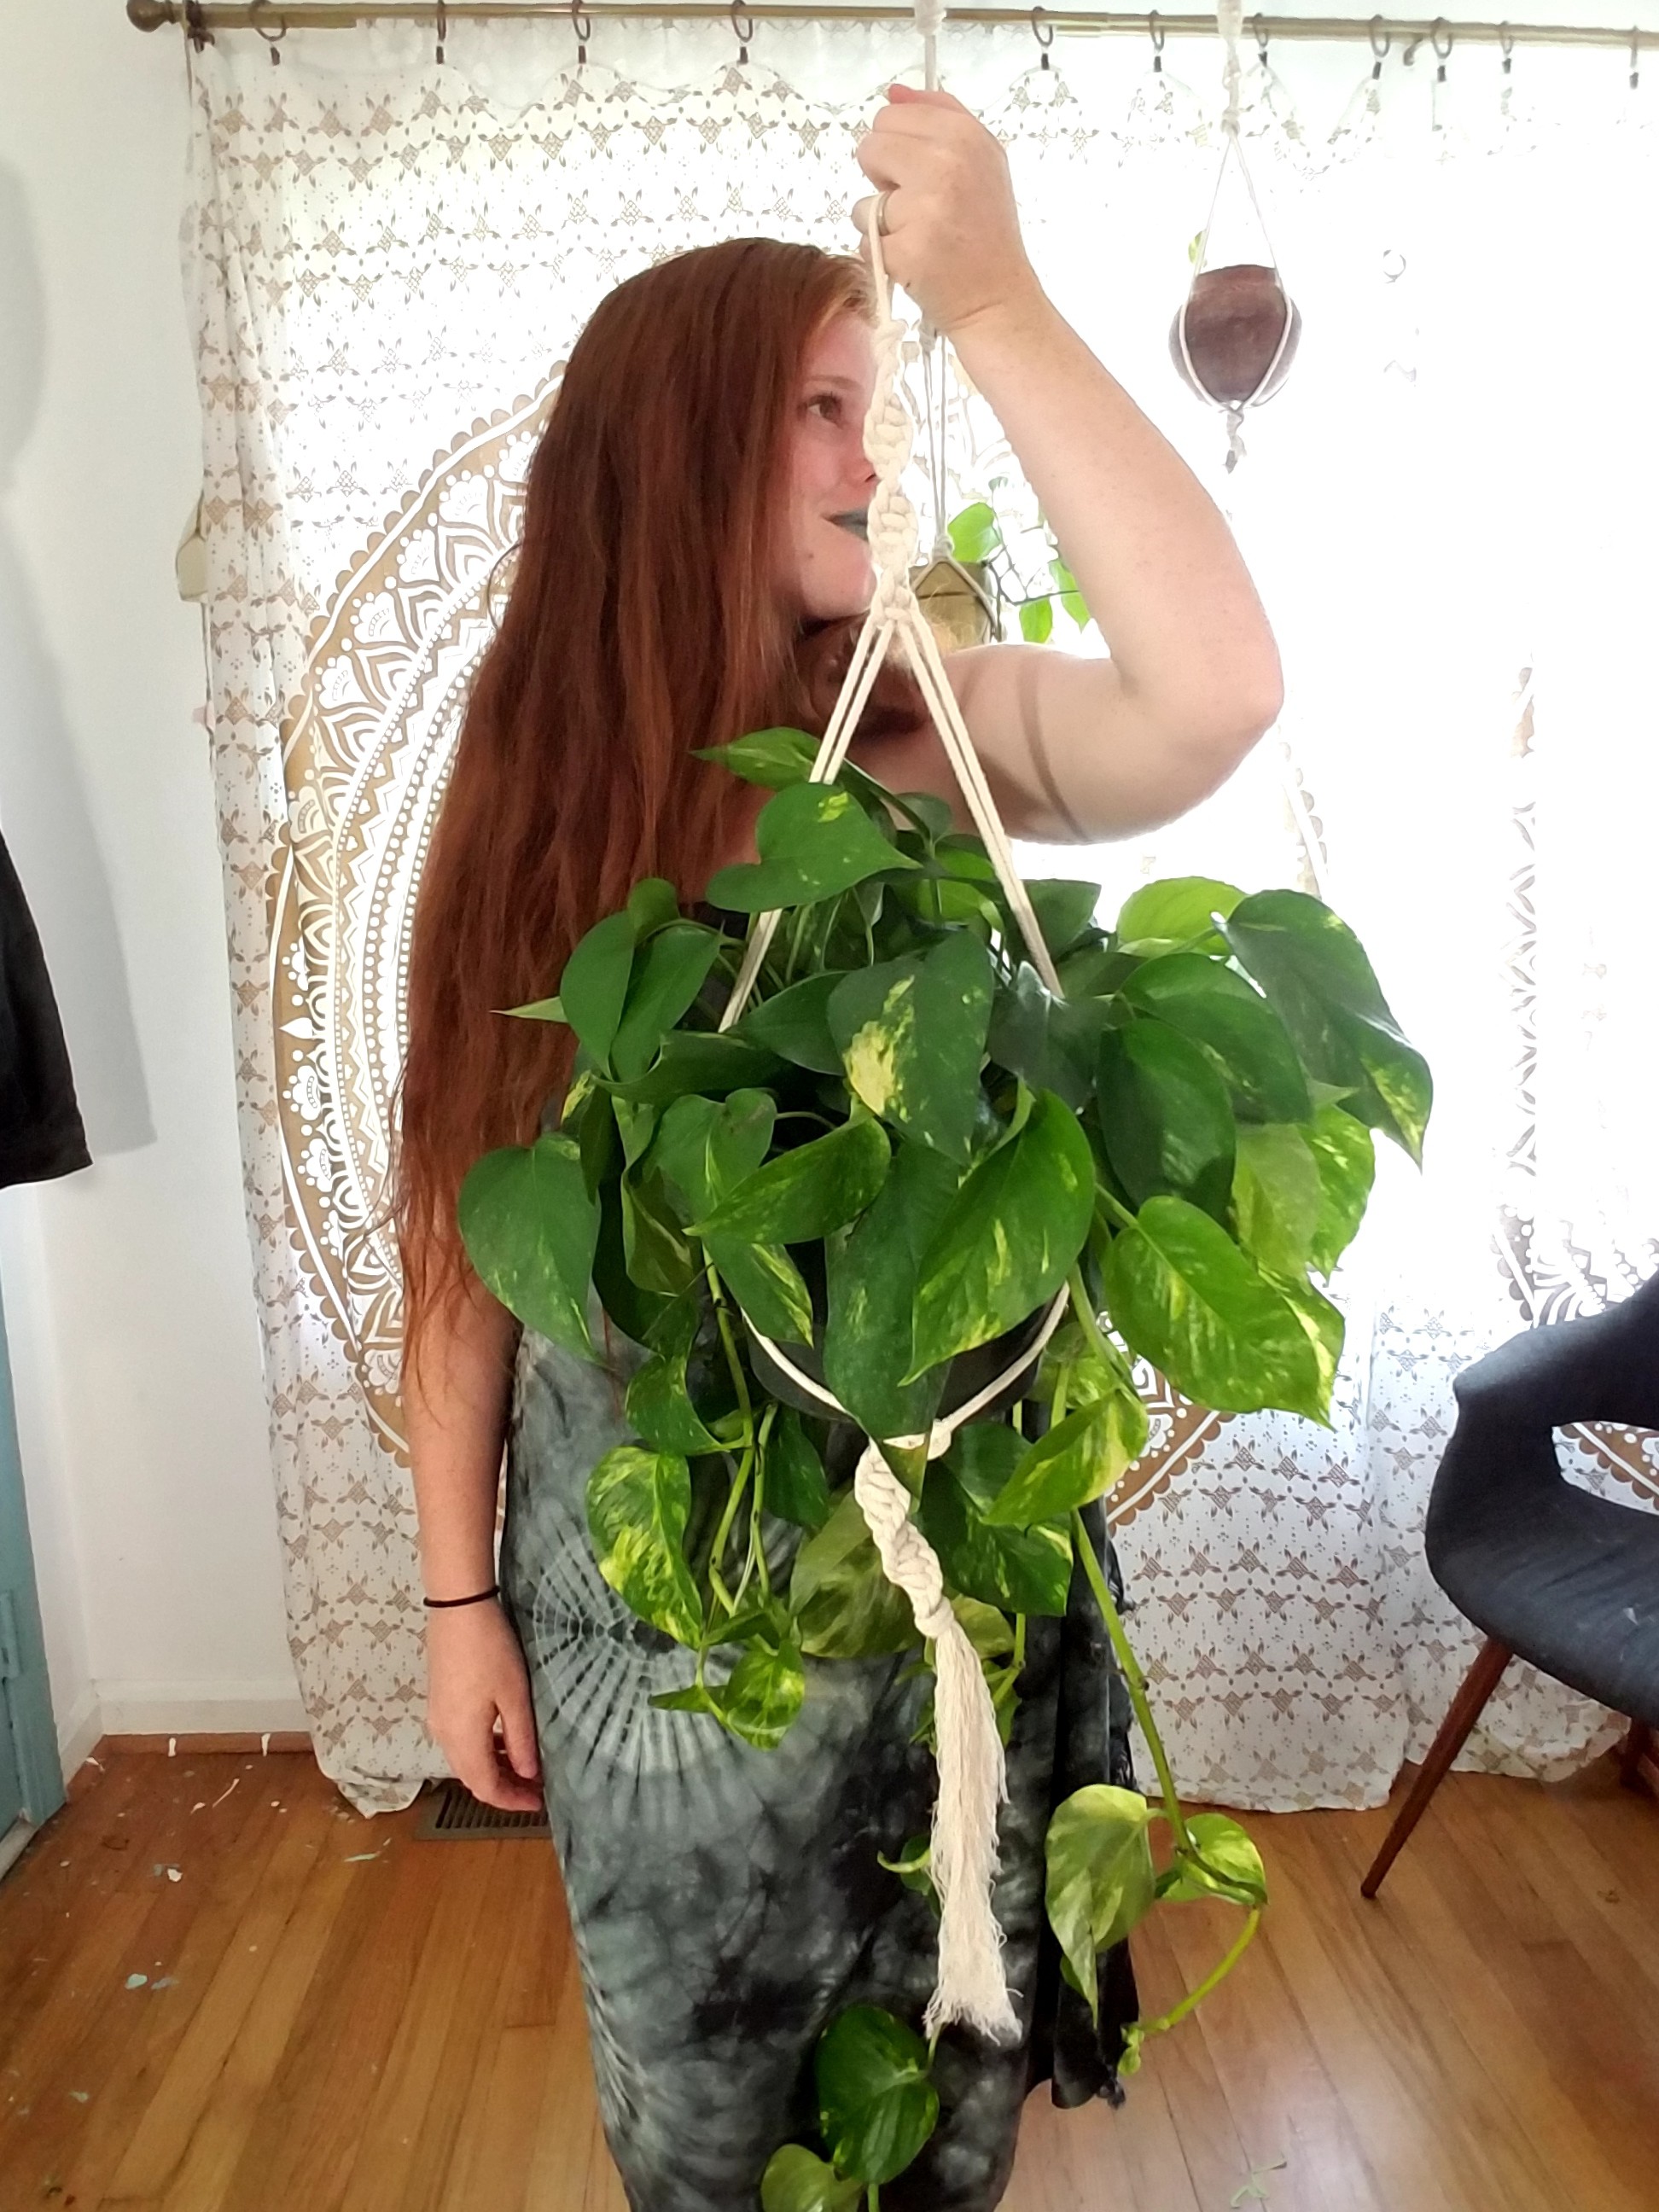 Bohemian make it yourself: macrame hanging planter with video tutorial @adesignerathome